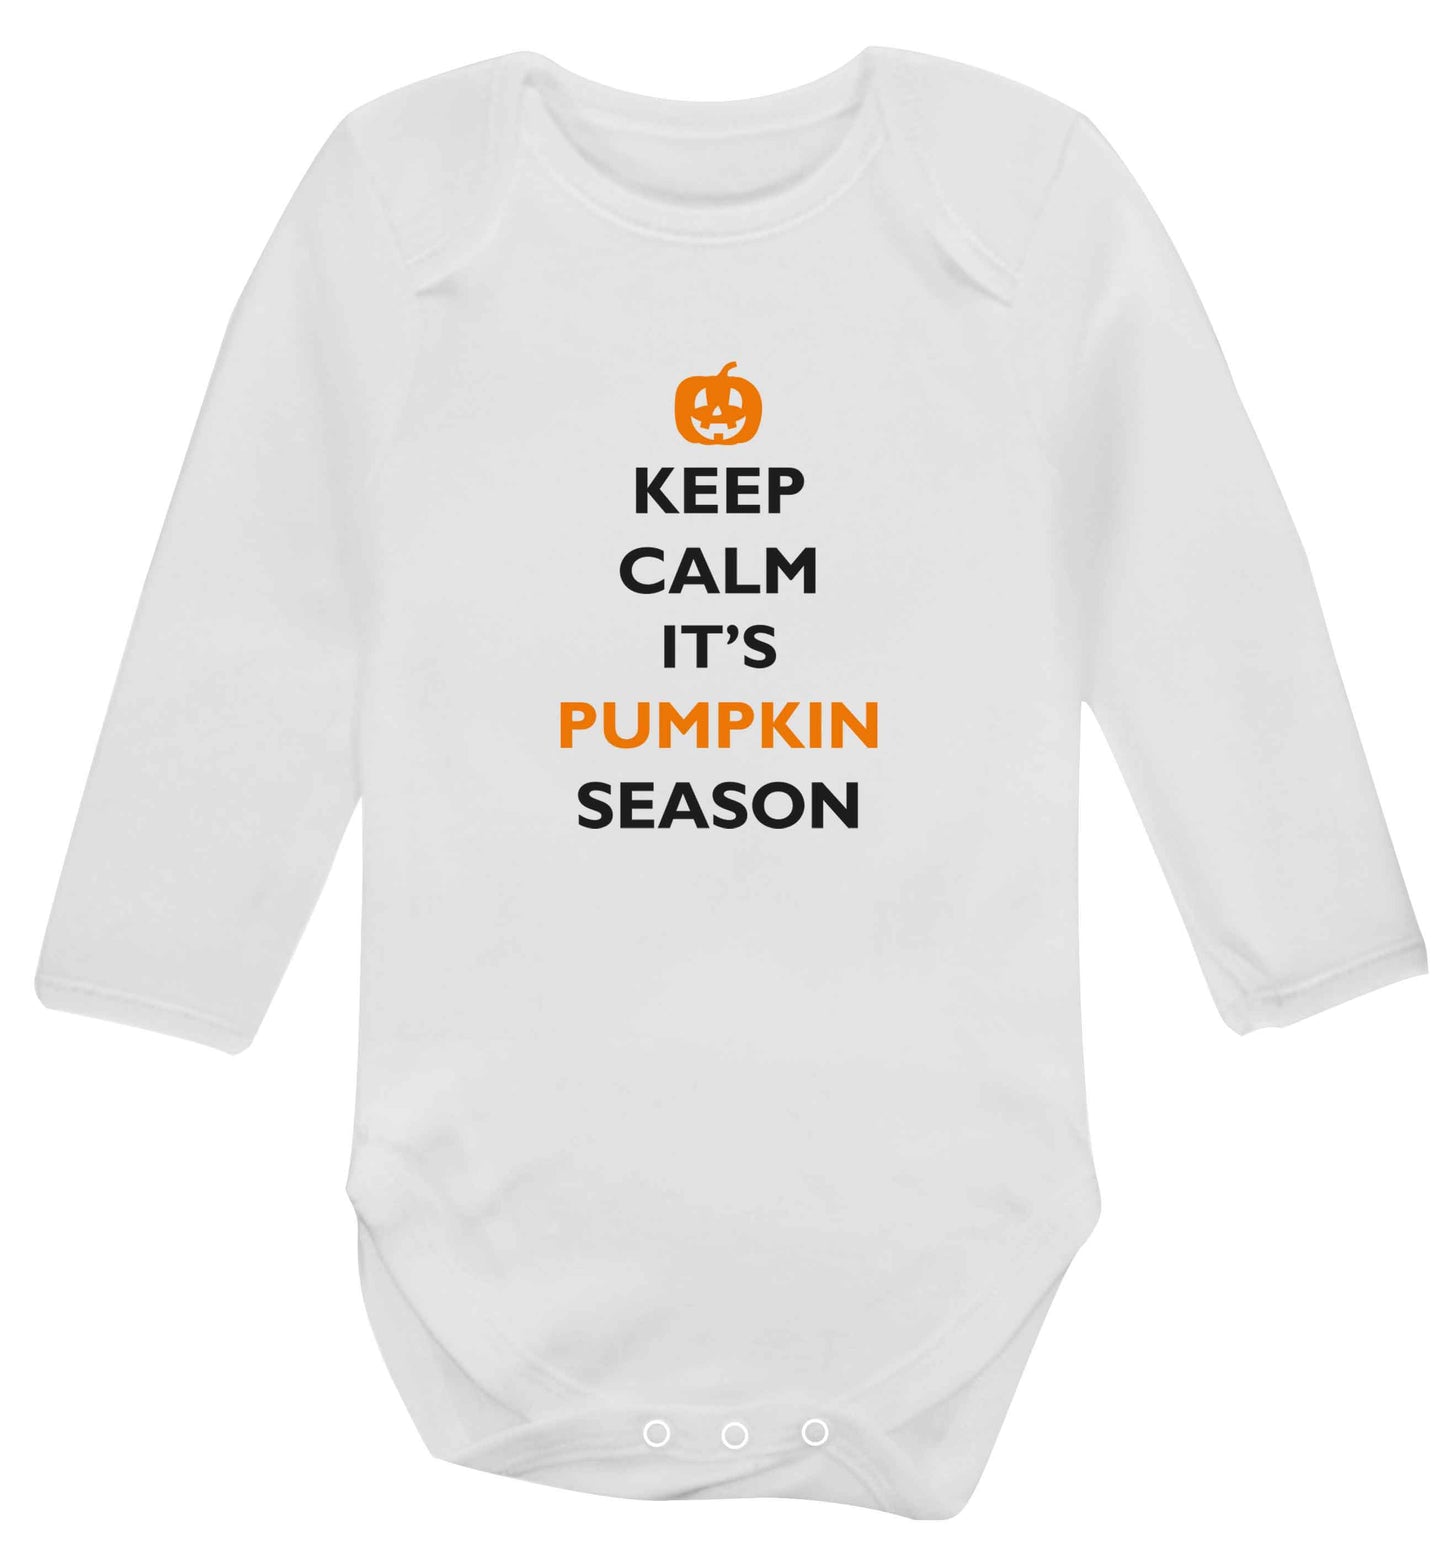 Calm Pumpkin Season baby vest long sleeved white 6-12 months